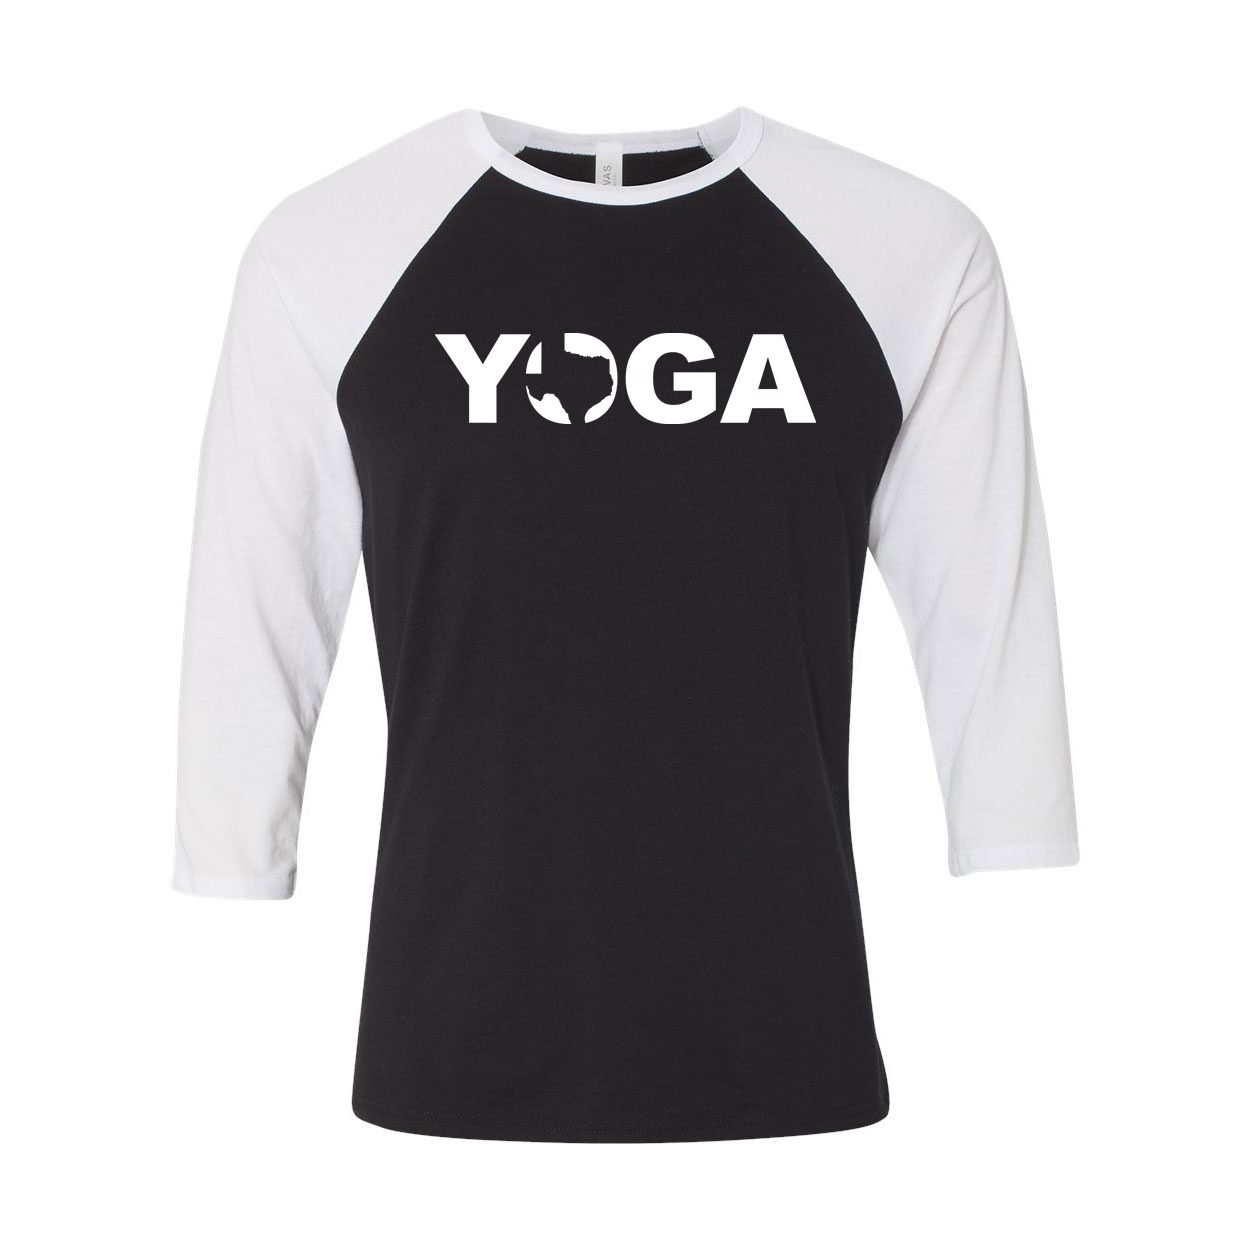 Yoga Texas Classic Raglan Shirt Black/White (White Logo)